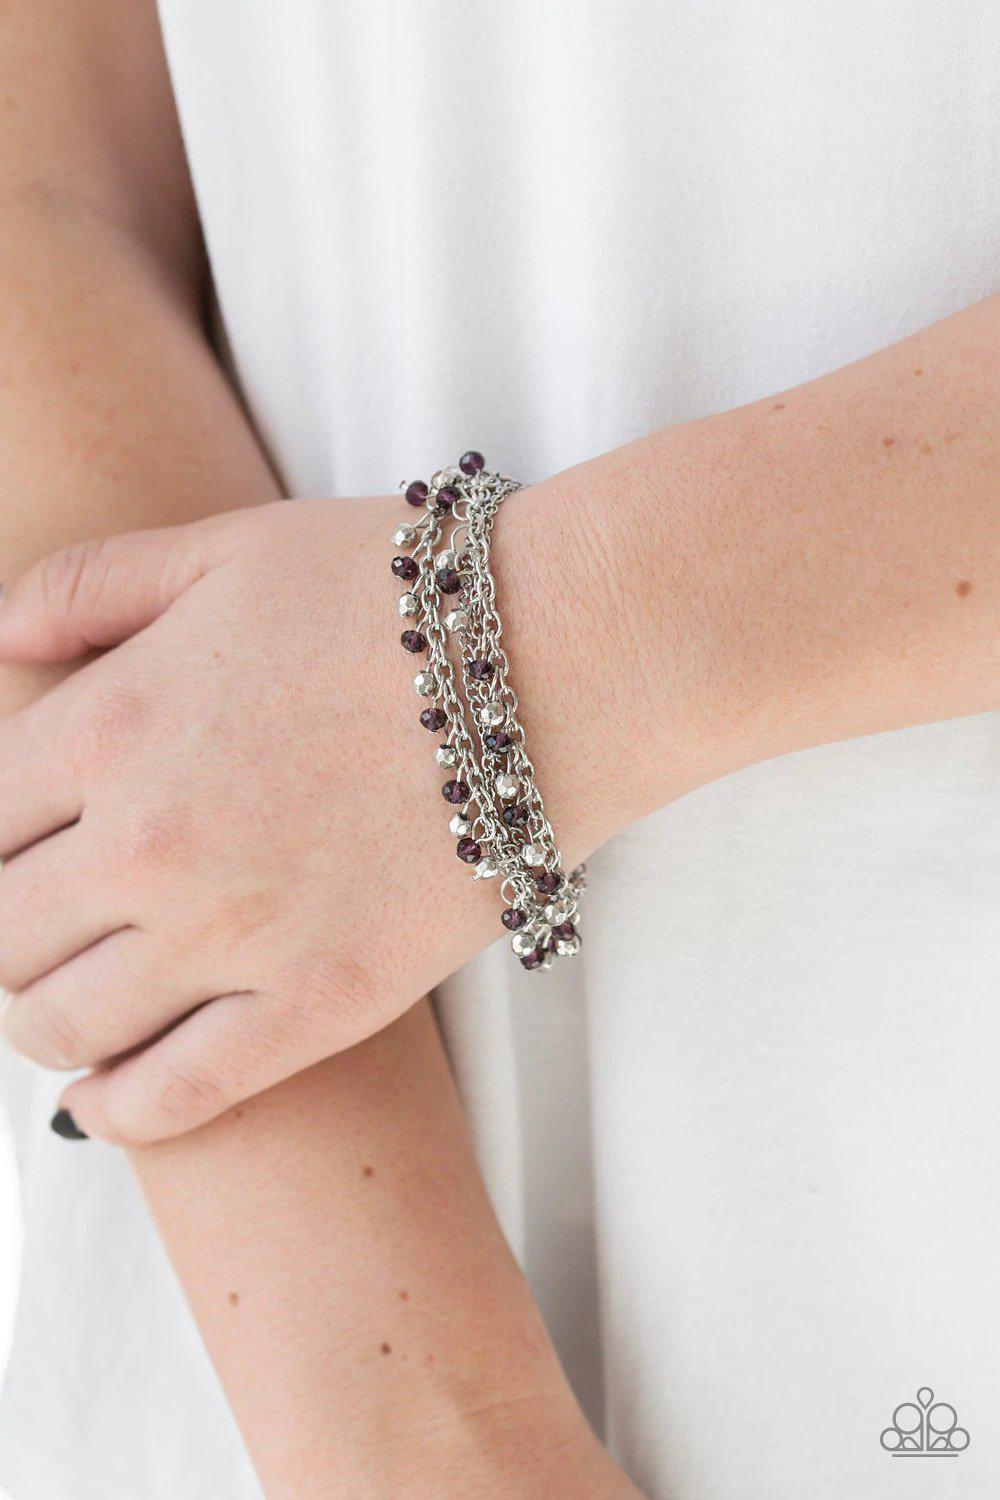 Cash Confidence Purple Bracelet - Paparazzi Accessories-on model - CarasShop.com - $5 Jewelry by Cara Jewels